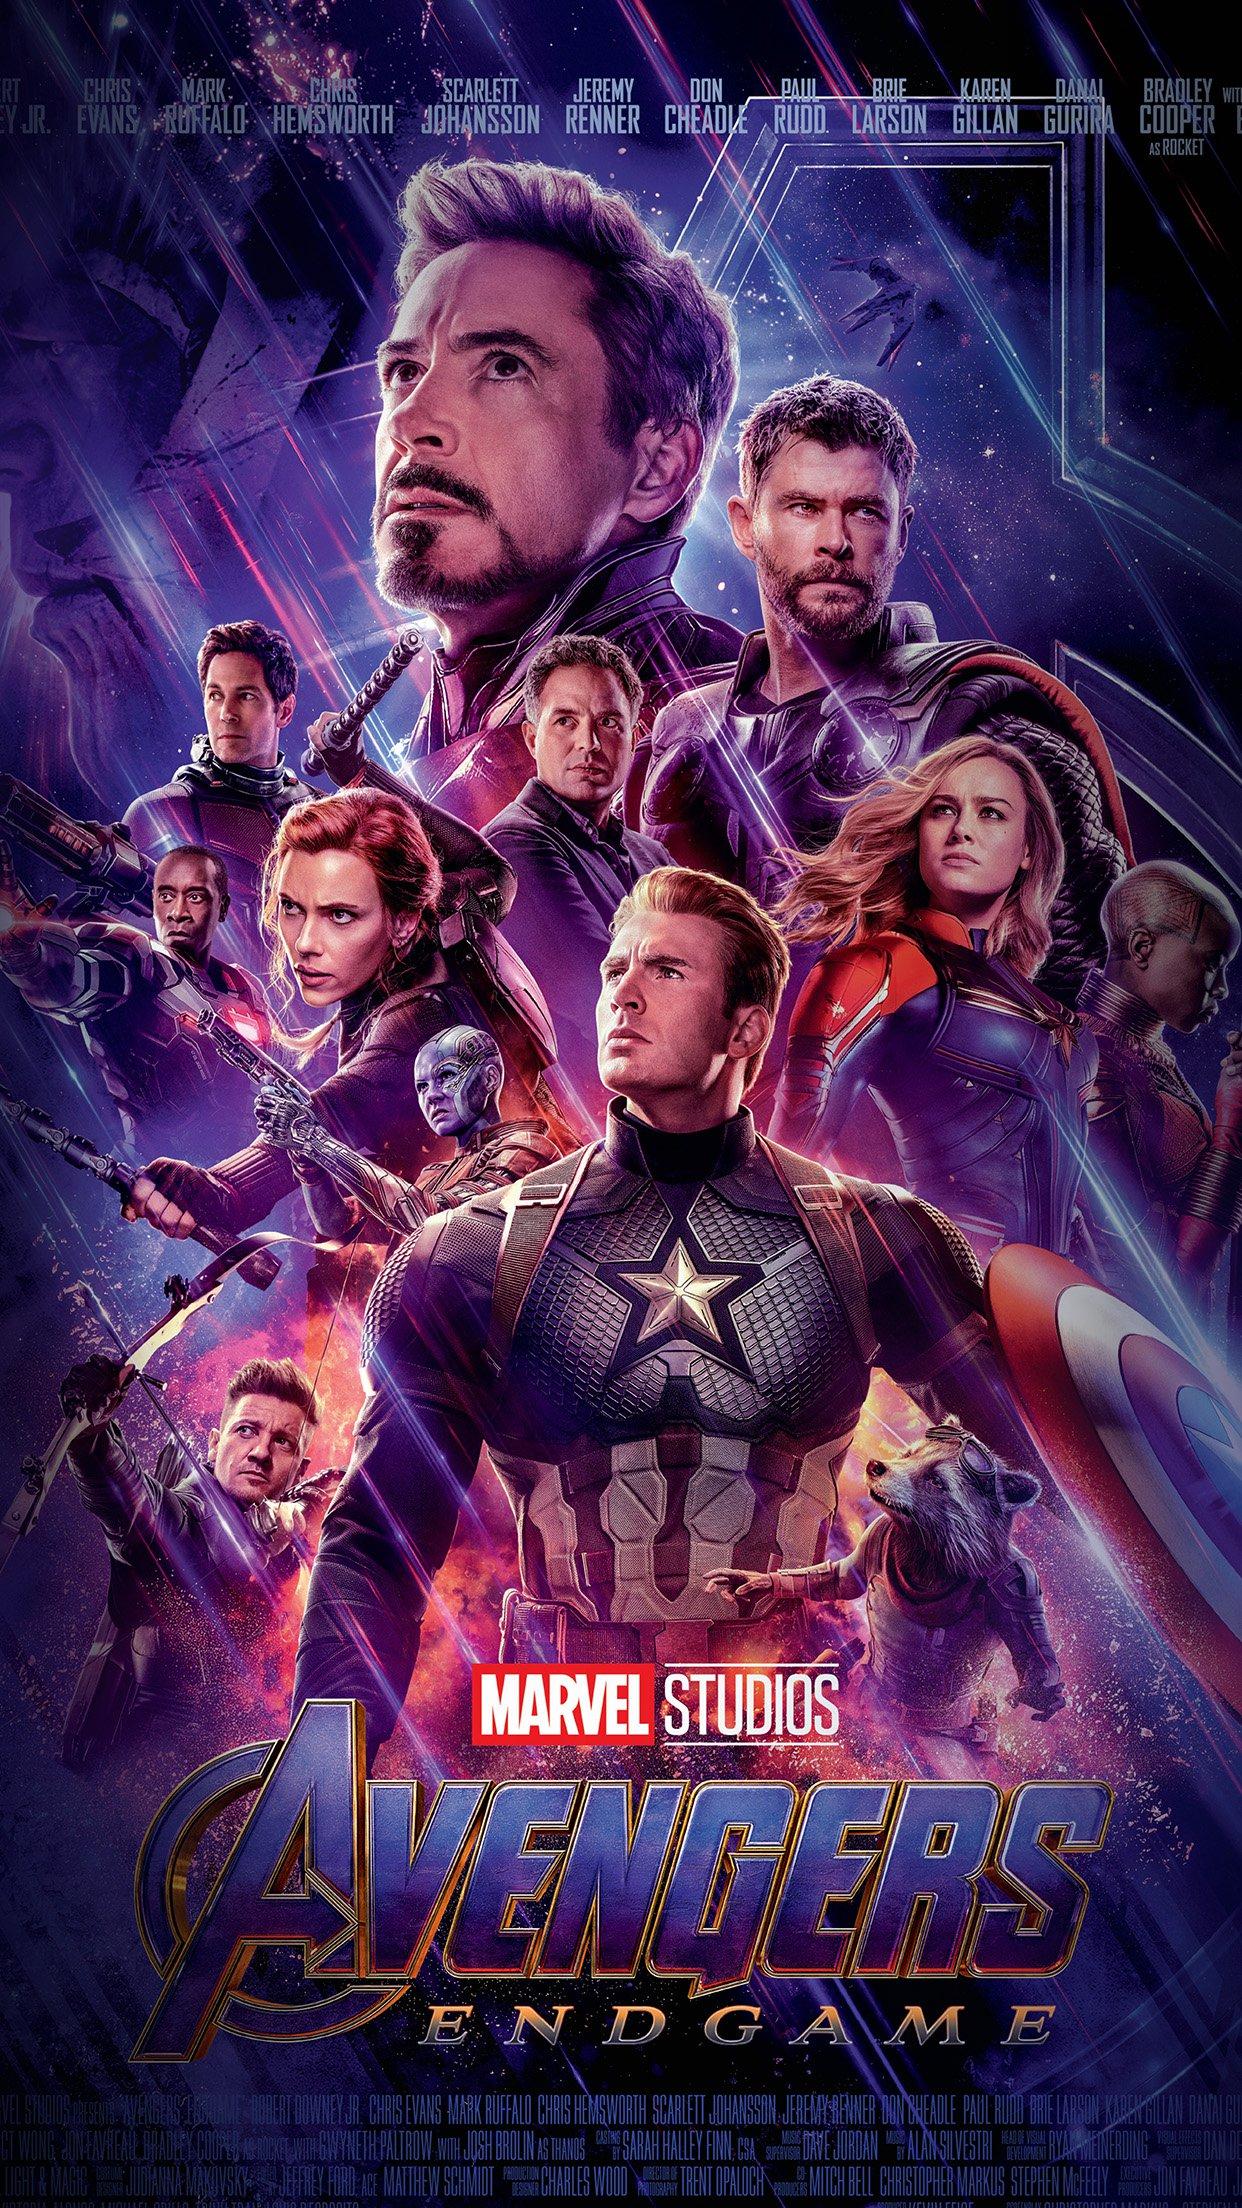 iPhone wallpaper. avengers poster hero